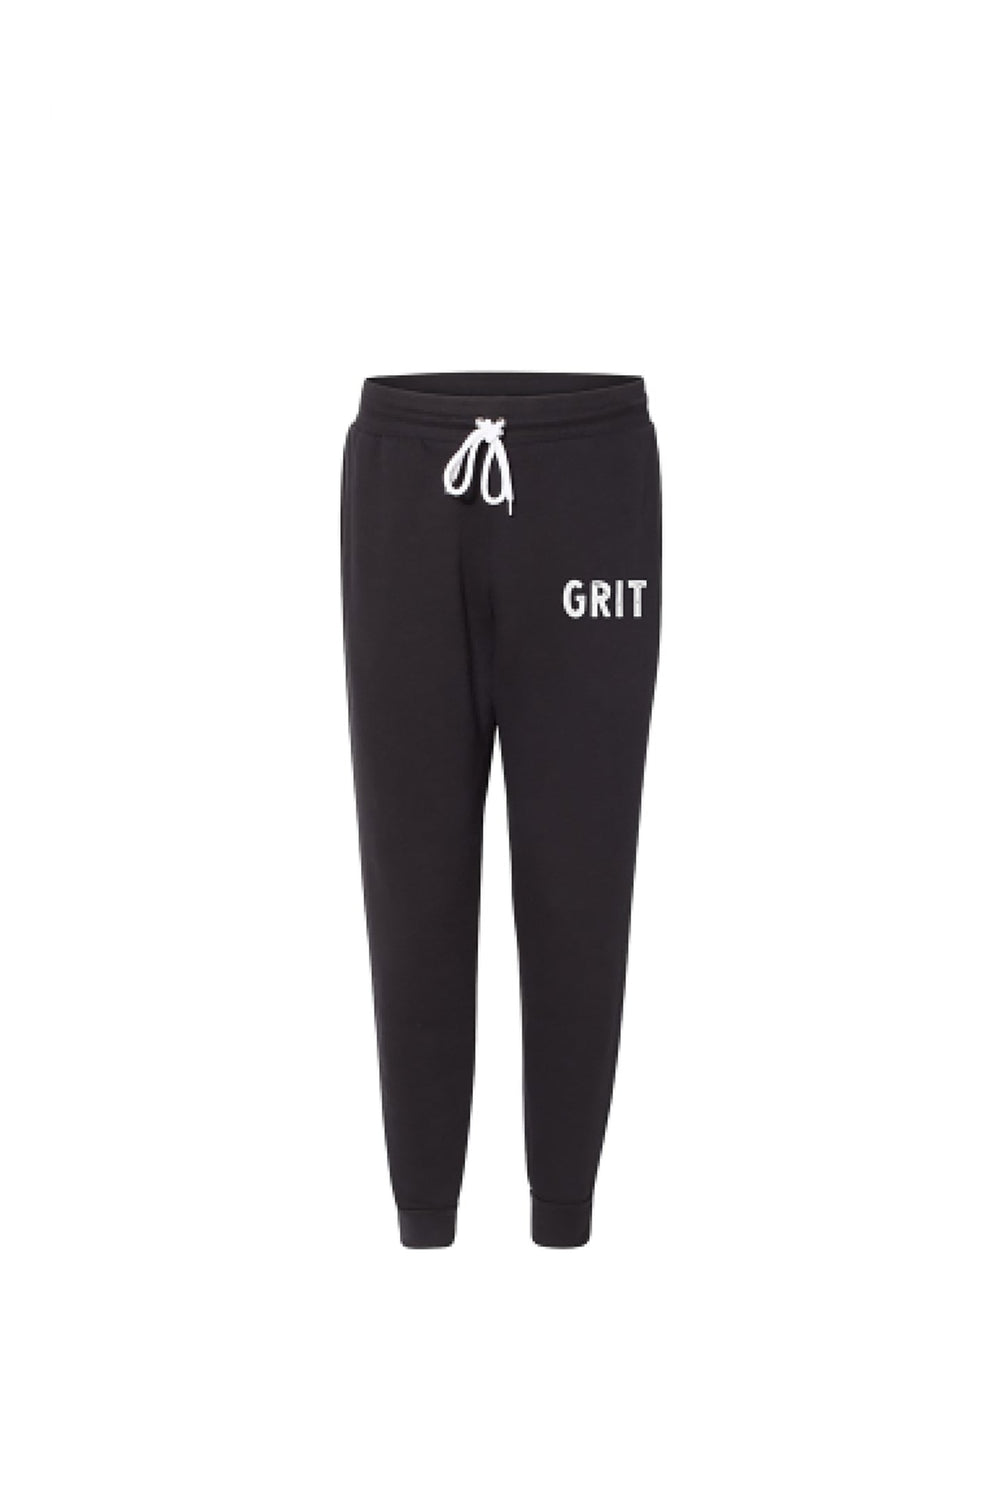 Sarah Marie Design Studio Pants GRIT Joggers